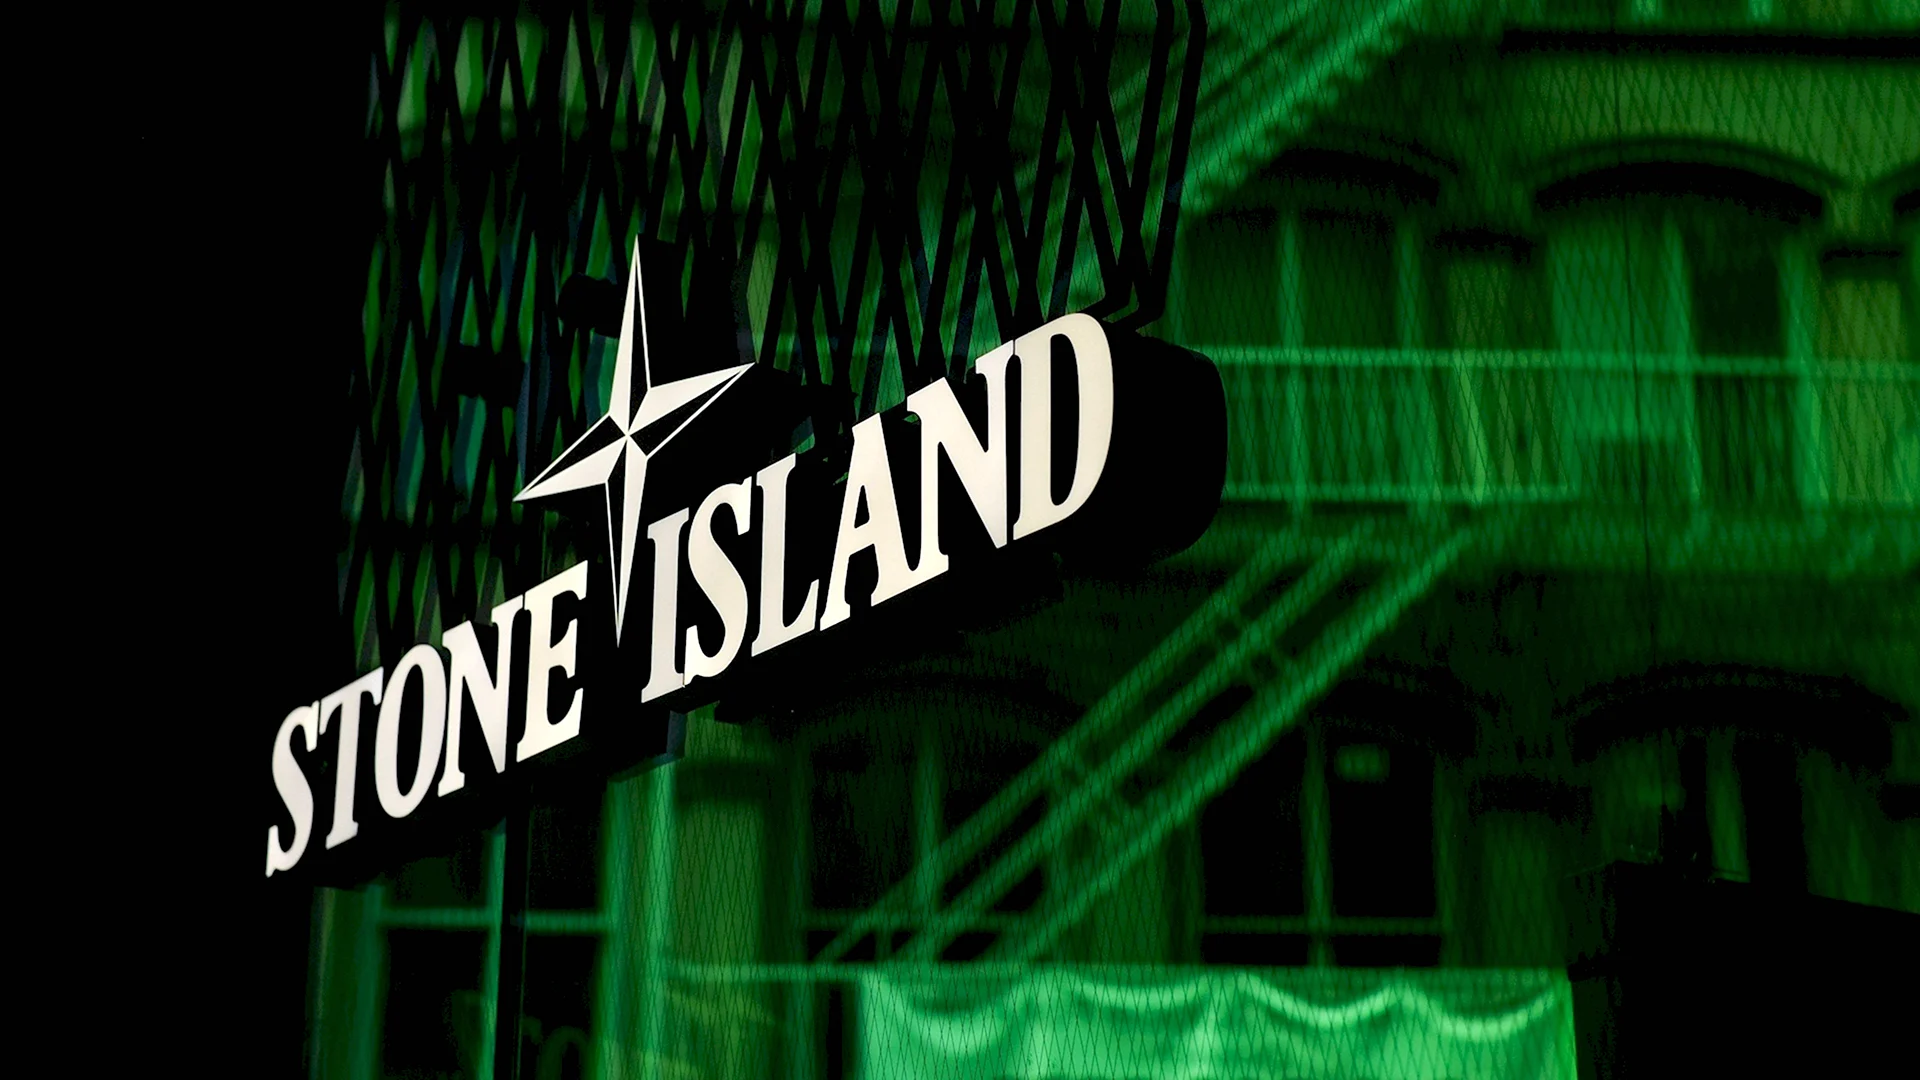 Stone Island обои